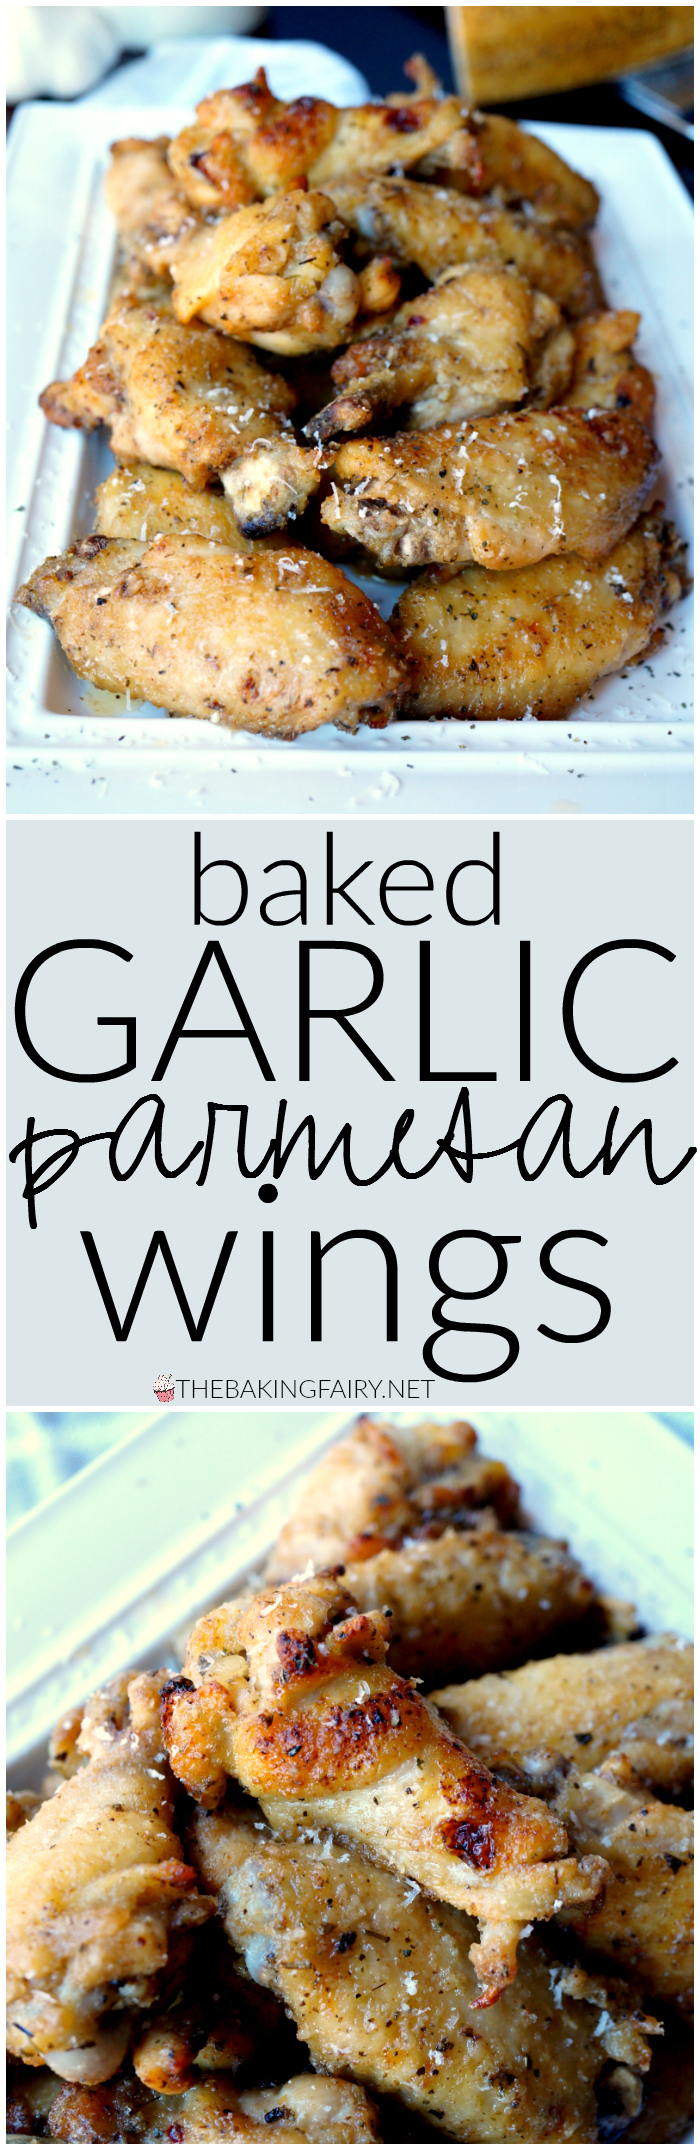 baked garlic parmesan wings | The Baking Fairy